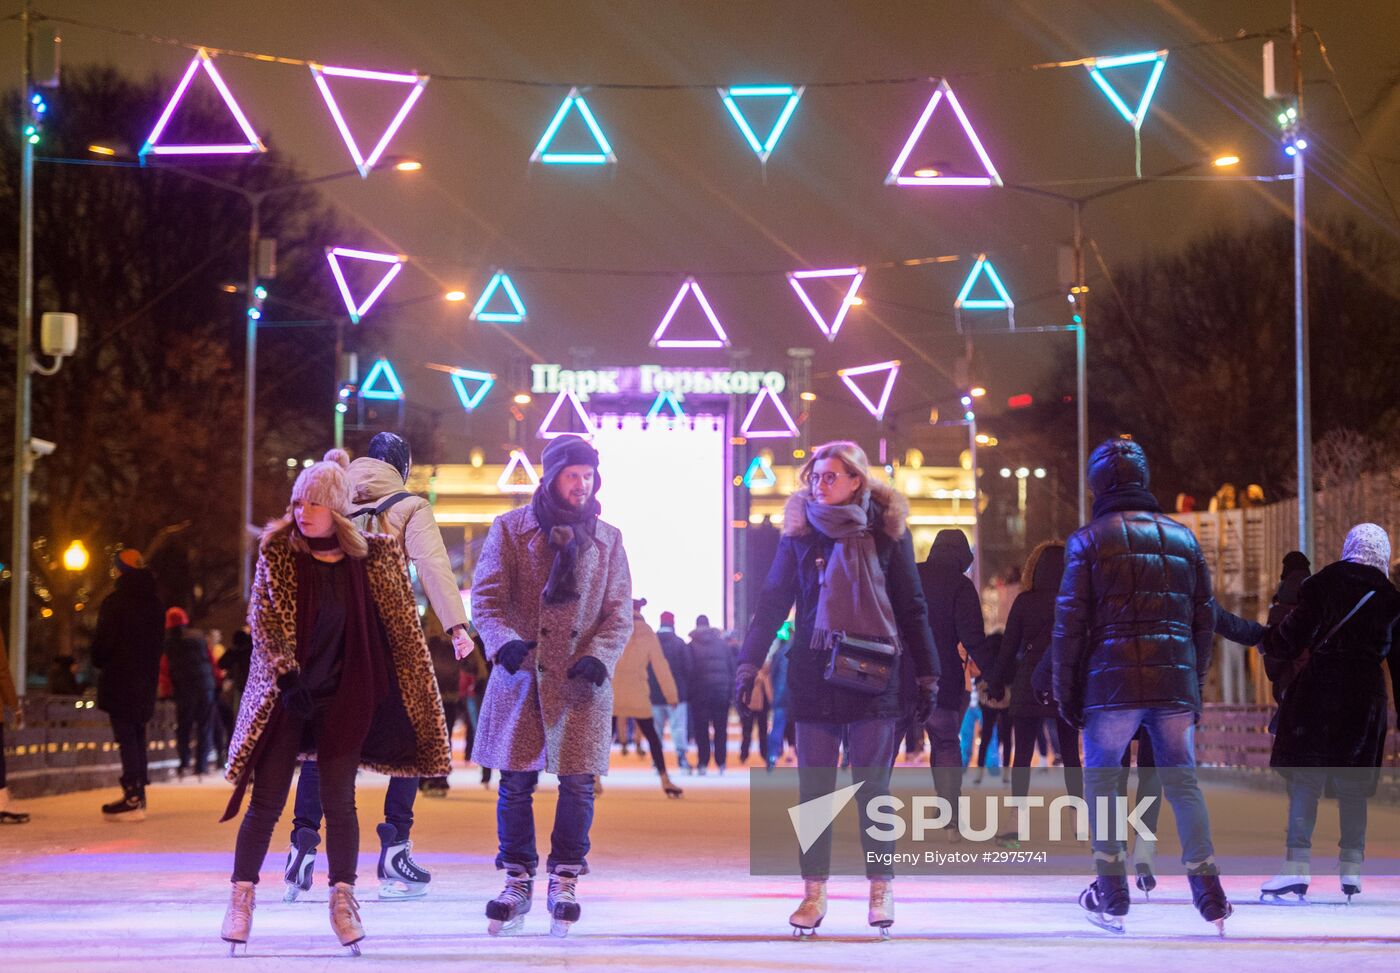 Street Rink opened for skating in Gorky Park